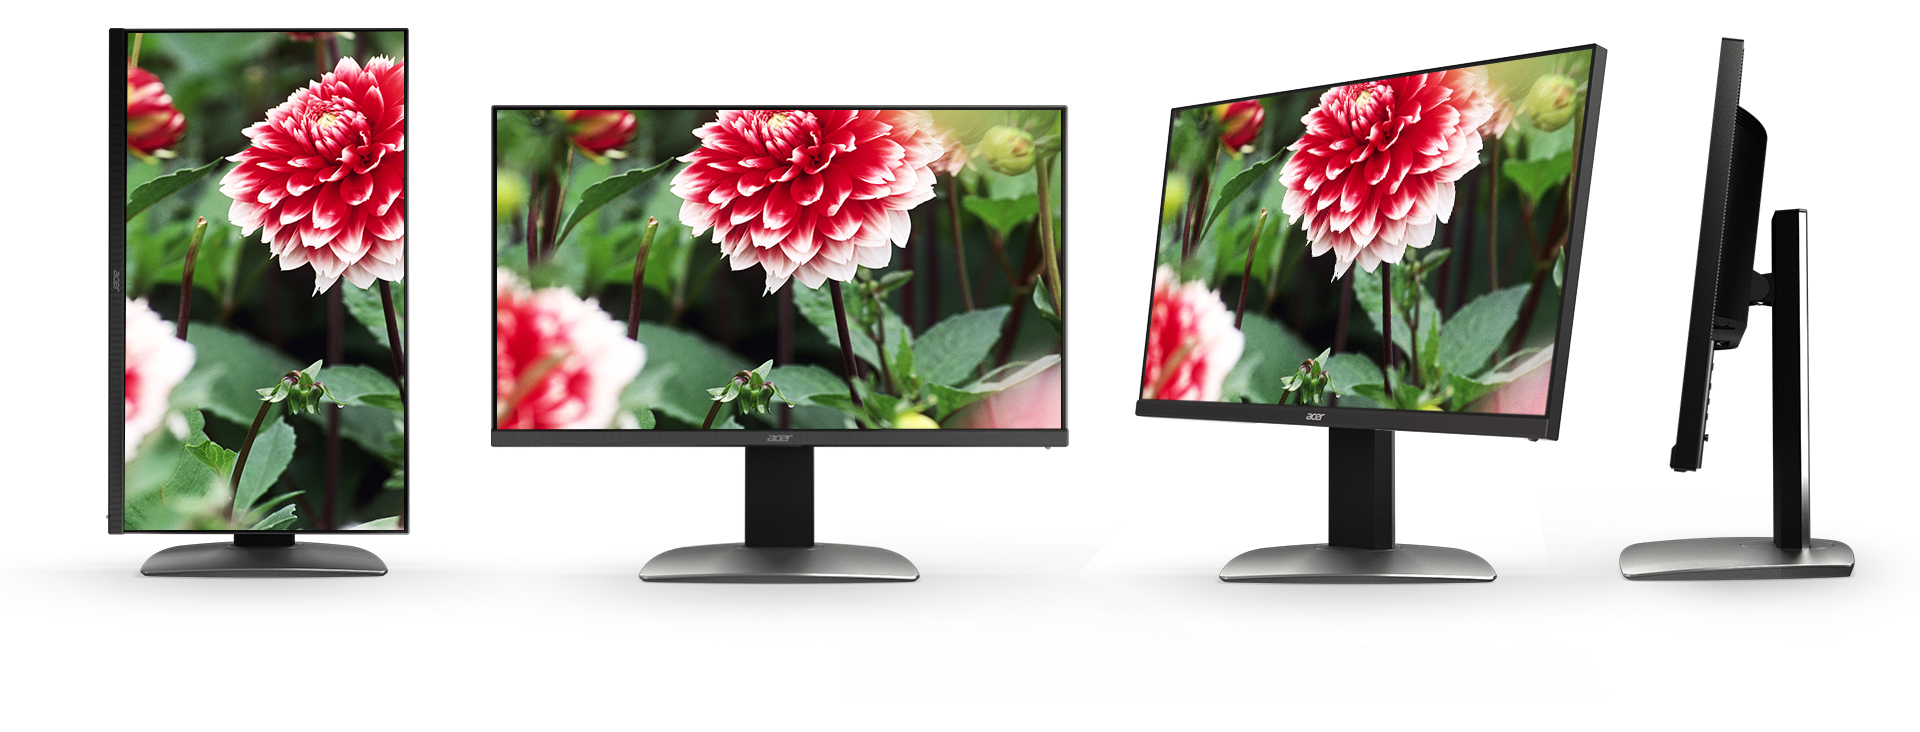 Acer announces their ProDesigner BM320 4K Ultra HD display